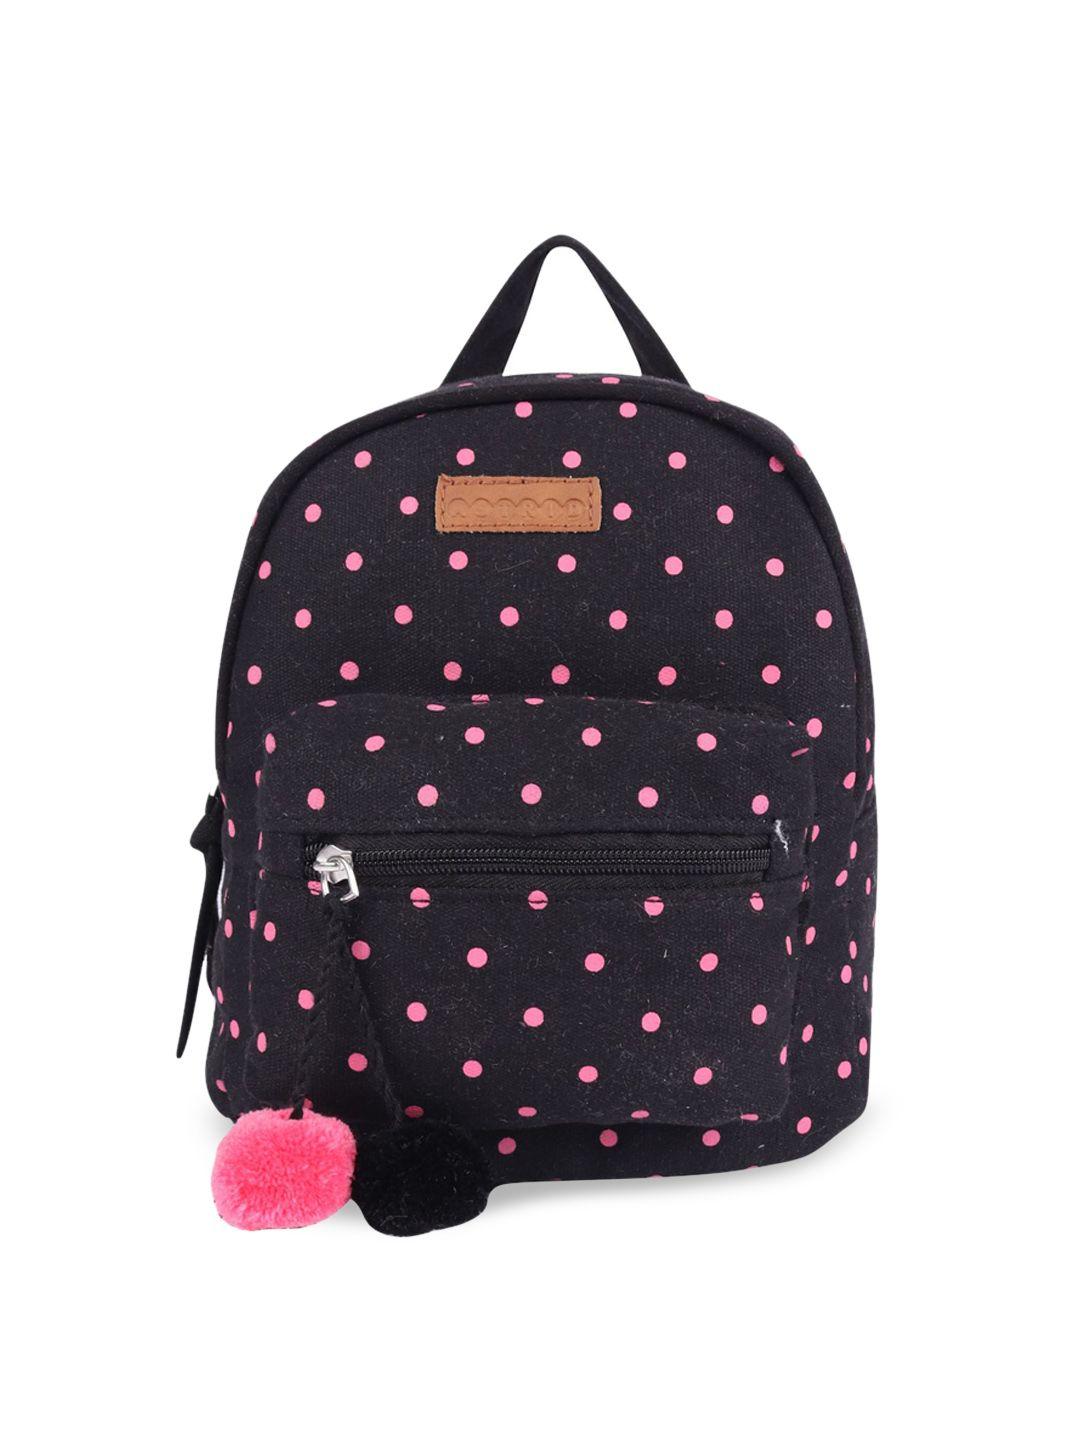 astrid girls black polka dot backpack